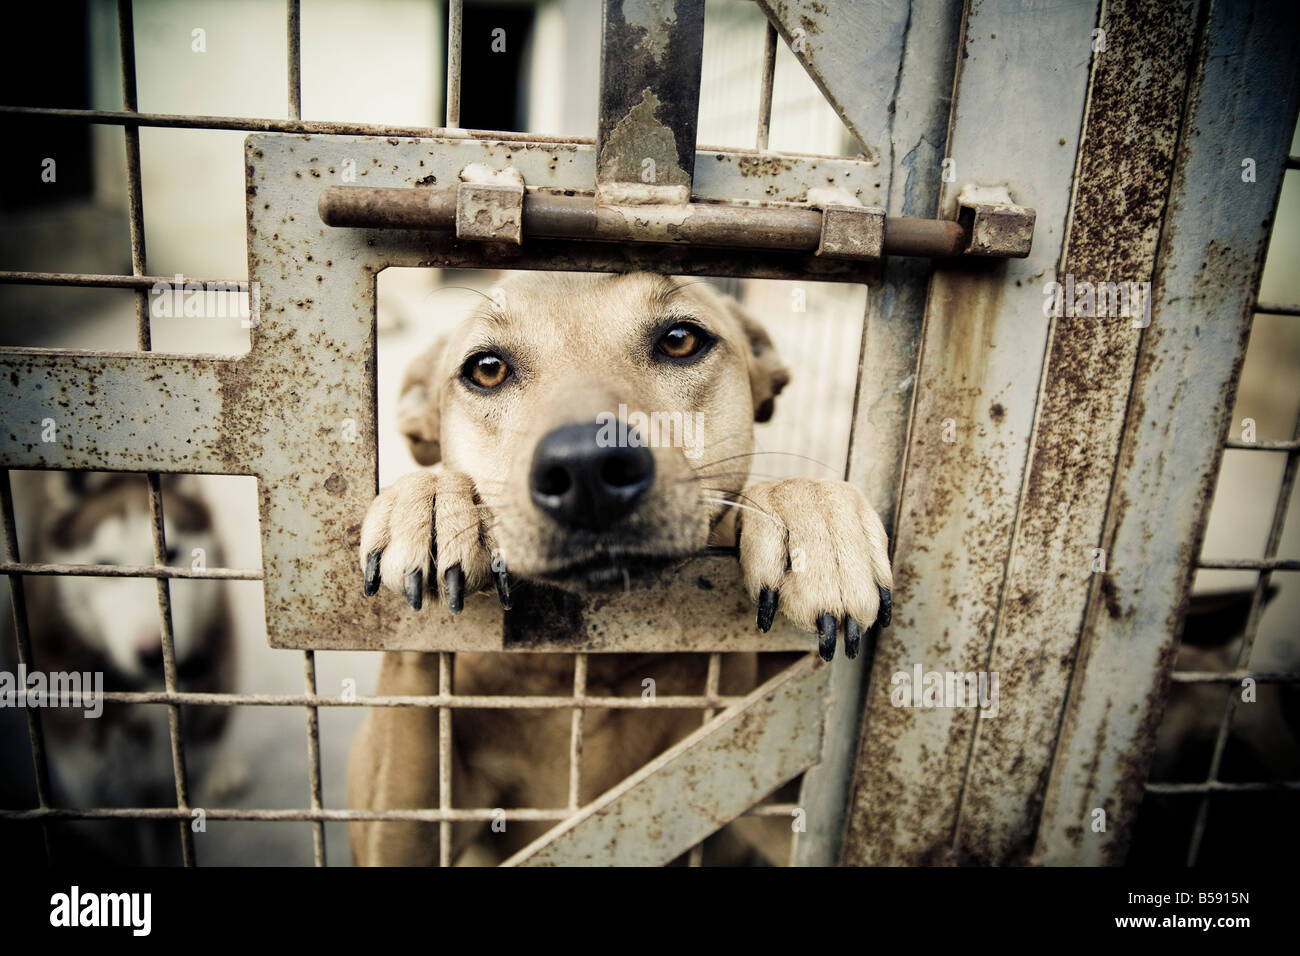 Dog in animal shelter. Stock Photo